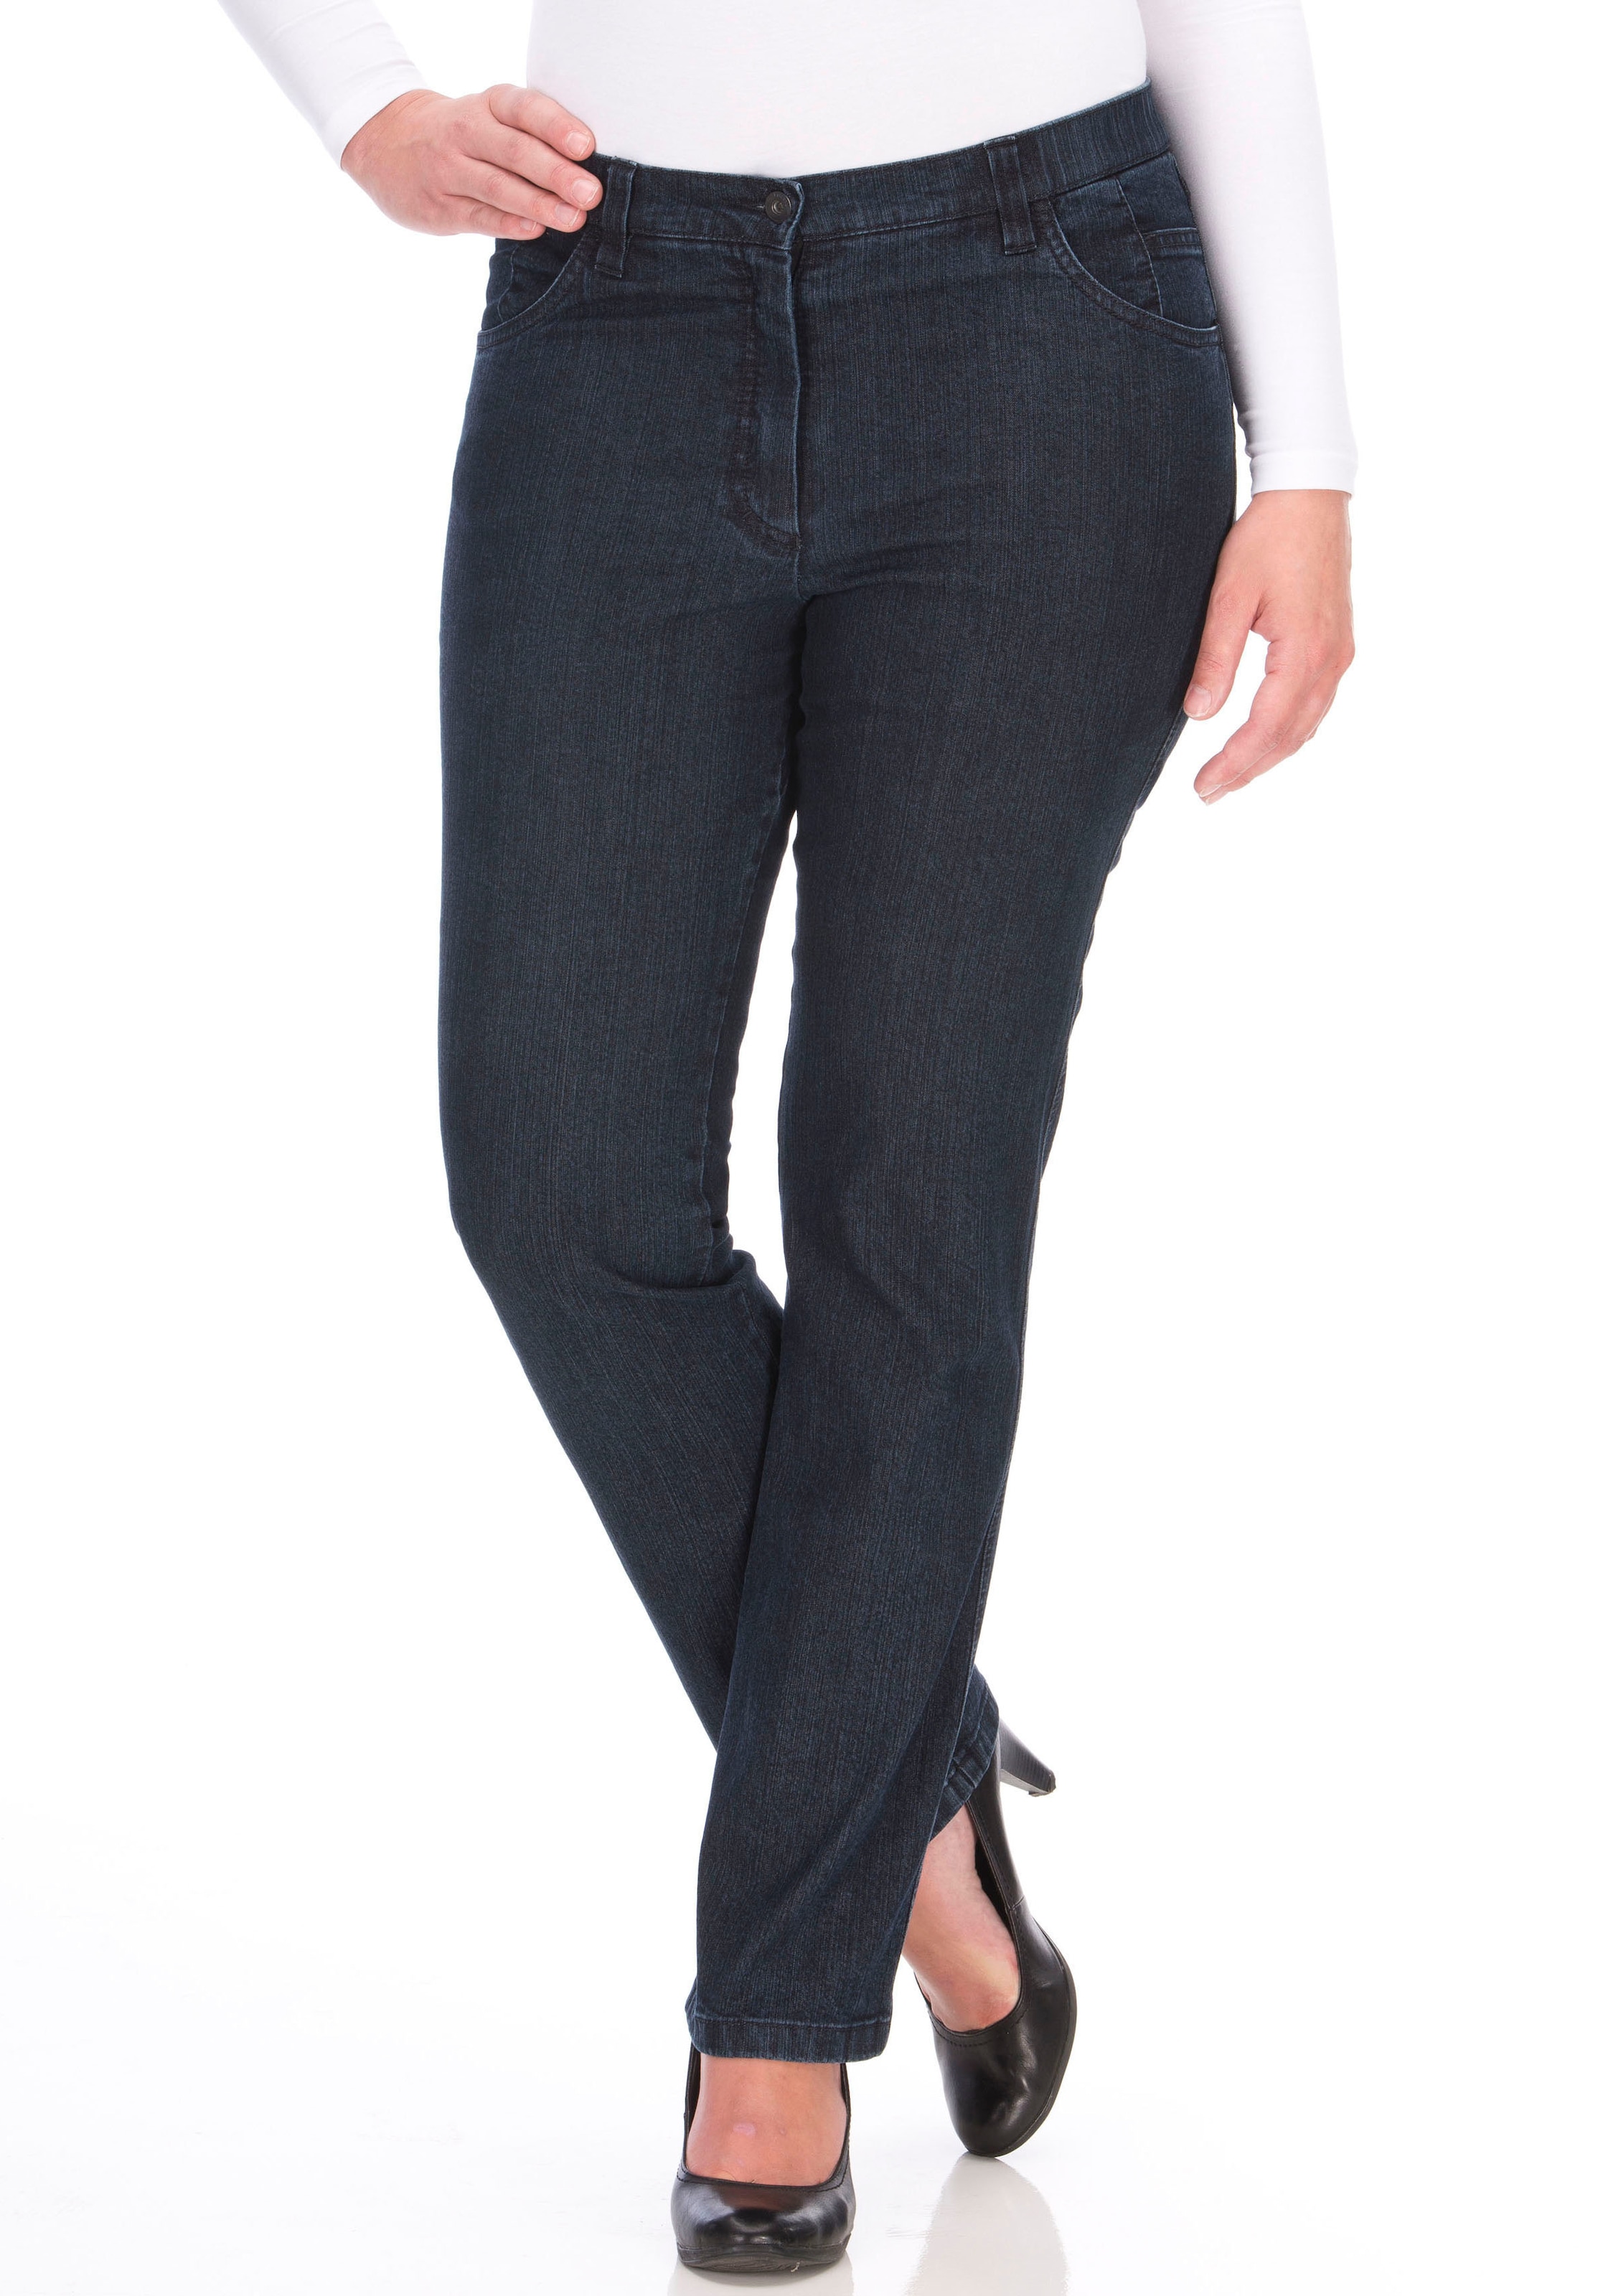 KjBRAND Stretch-Jeans »Betty CS Stretch Denim kaufen für BAUR Stretch«, mit 